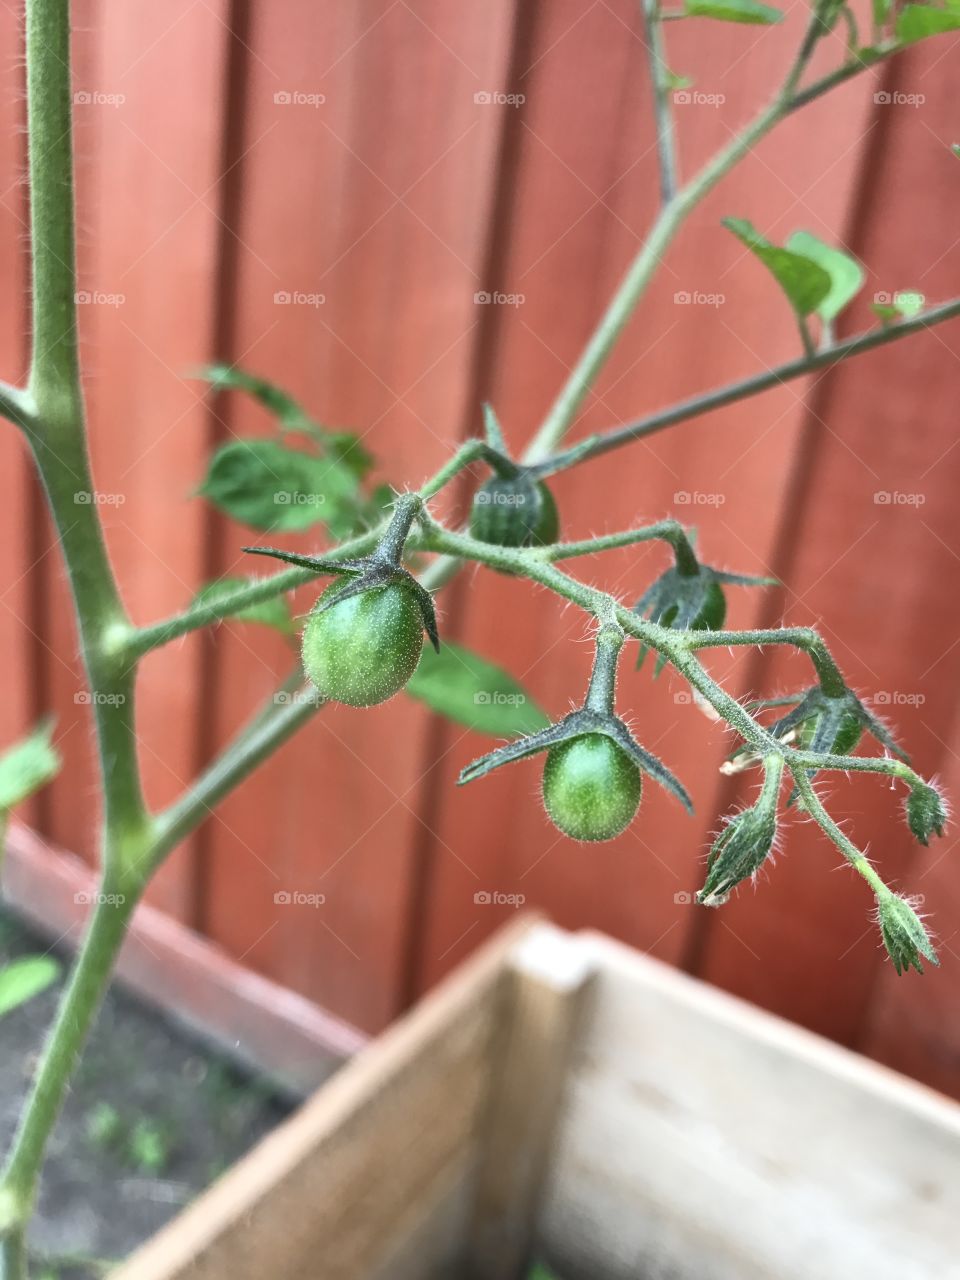 Tomatoes!!